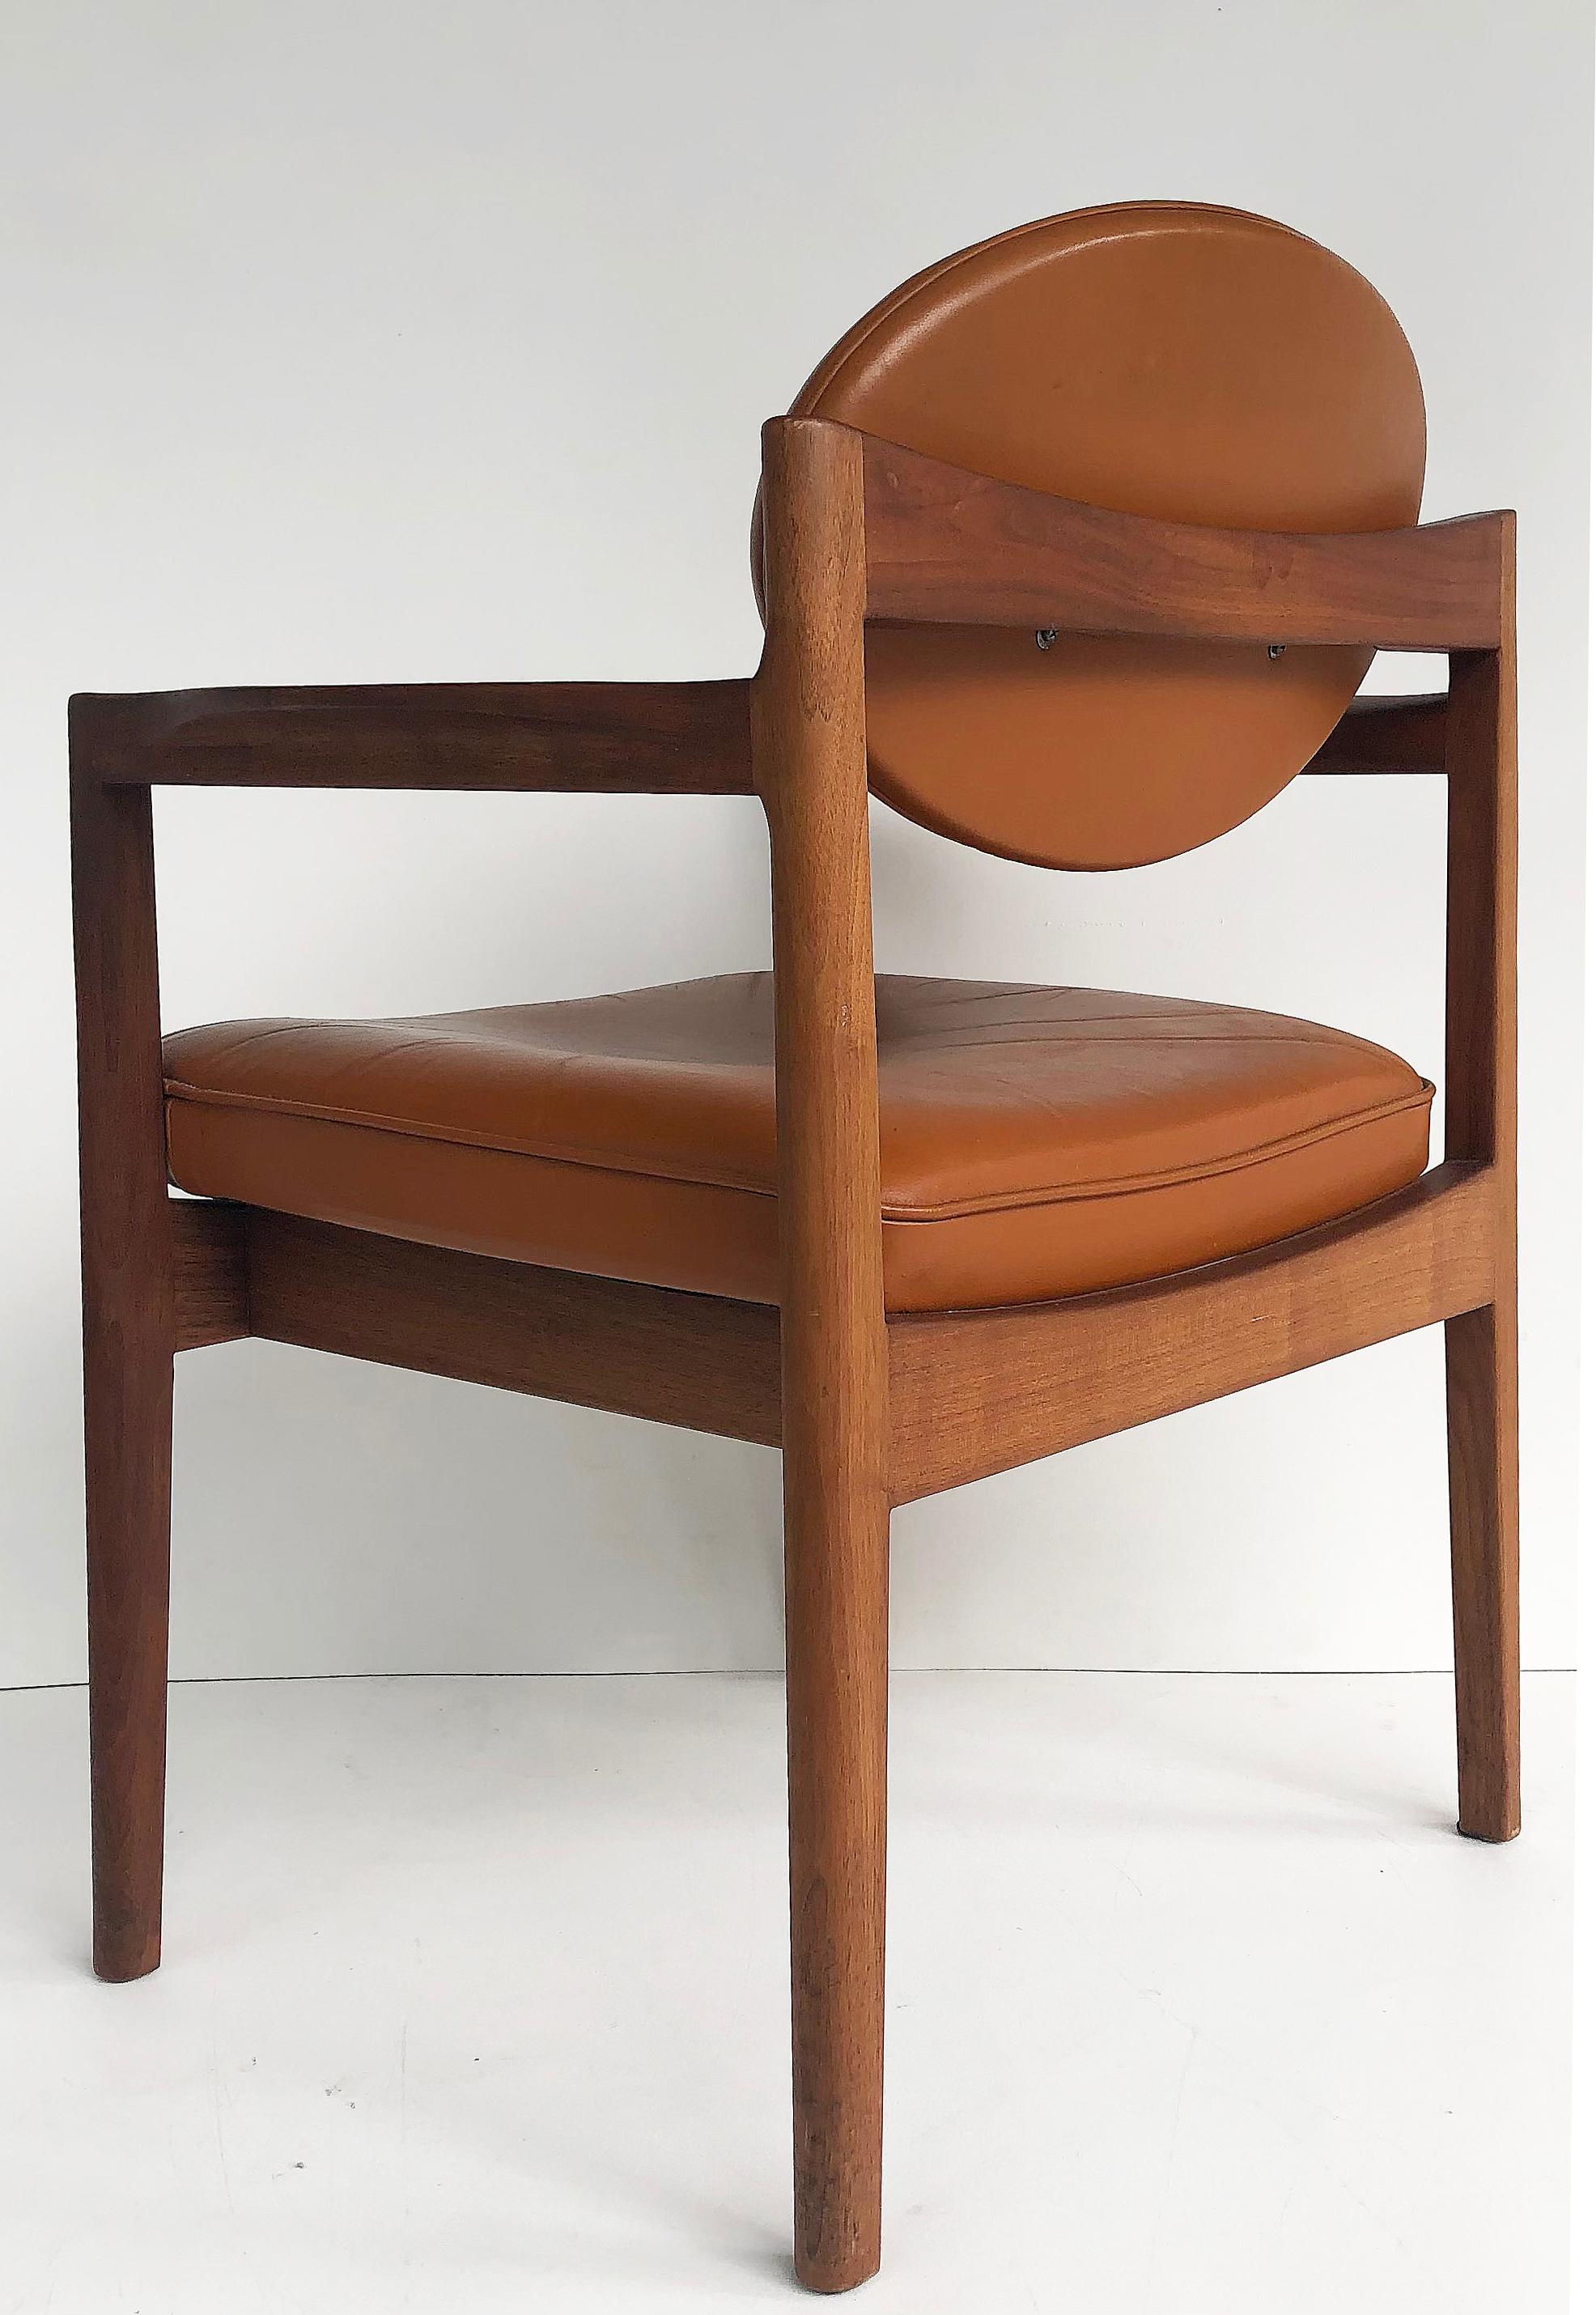 Jens Risom Design Paar gepolsterte Sessel aus geöltem Nussbaumholz und Leder, ca. 1965 (20. Jahrhundert) im Angebot